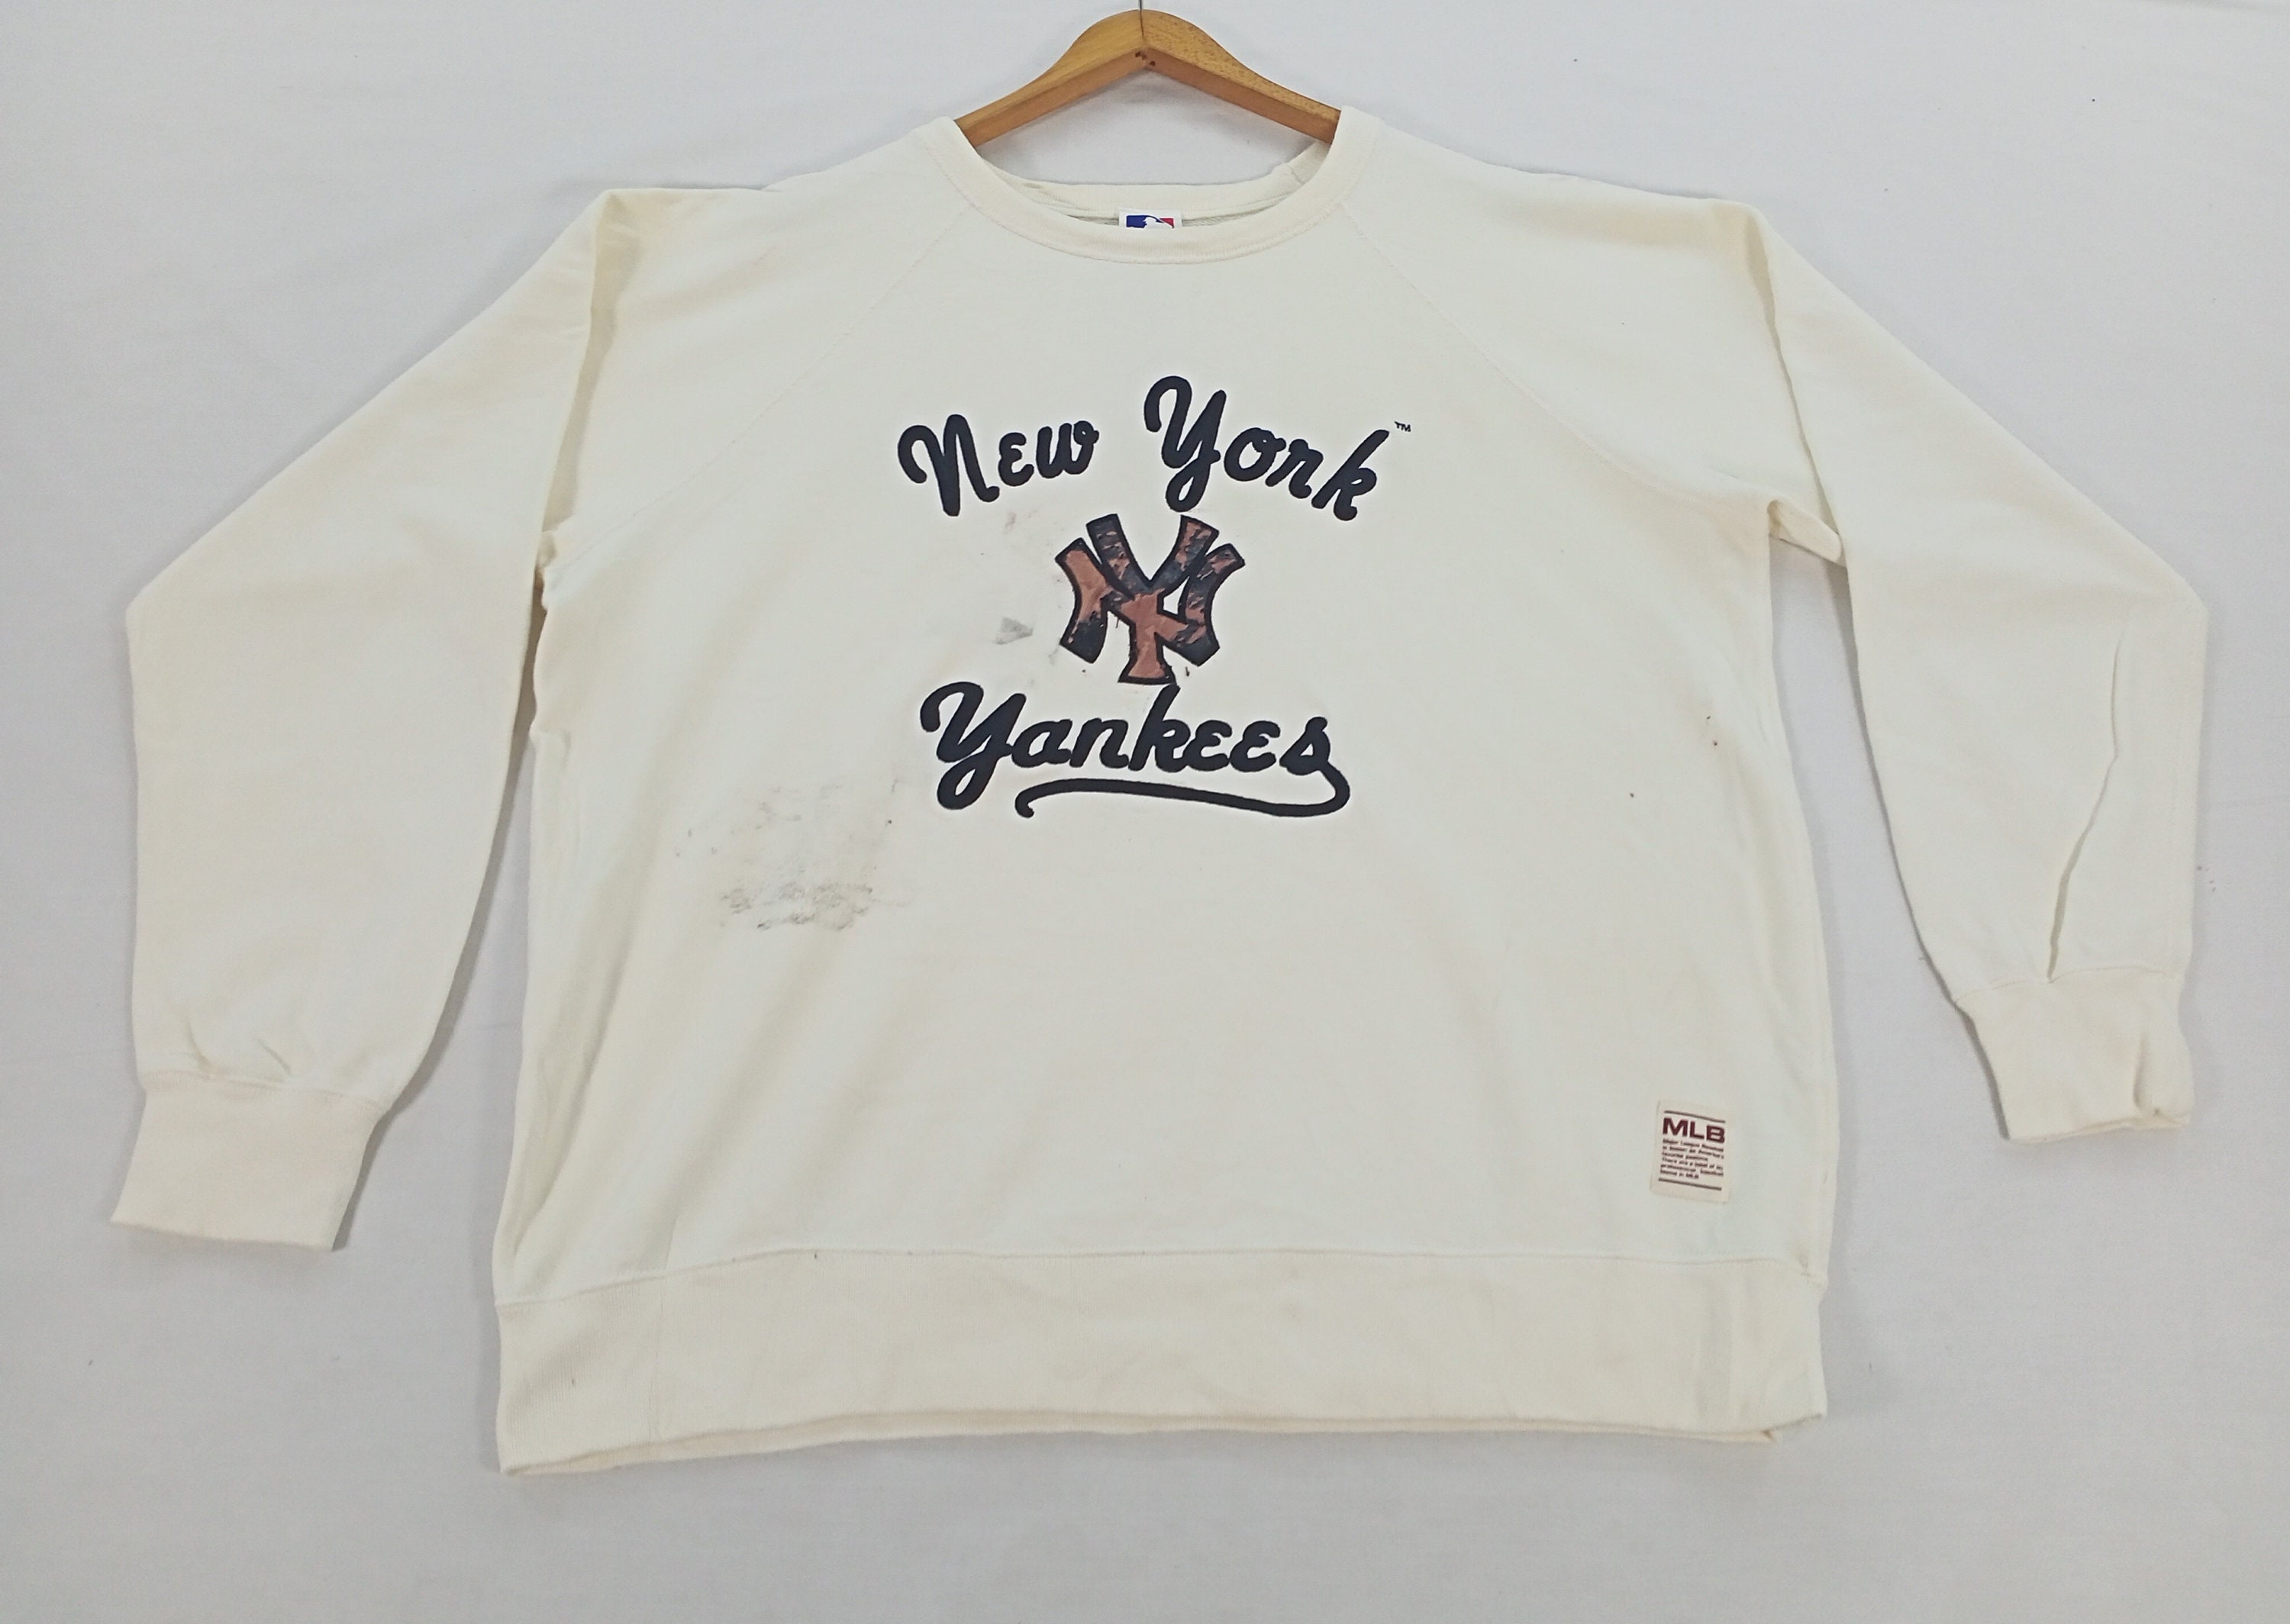 MLB New York Yankees Girls' Crew Neck T-Shirt - L